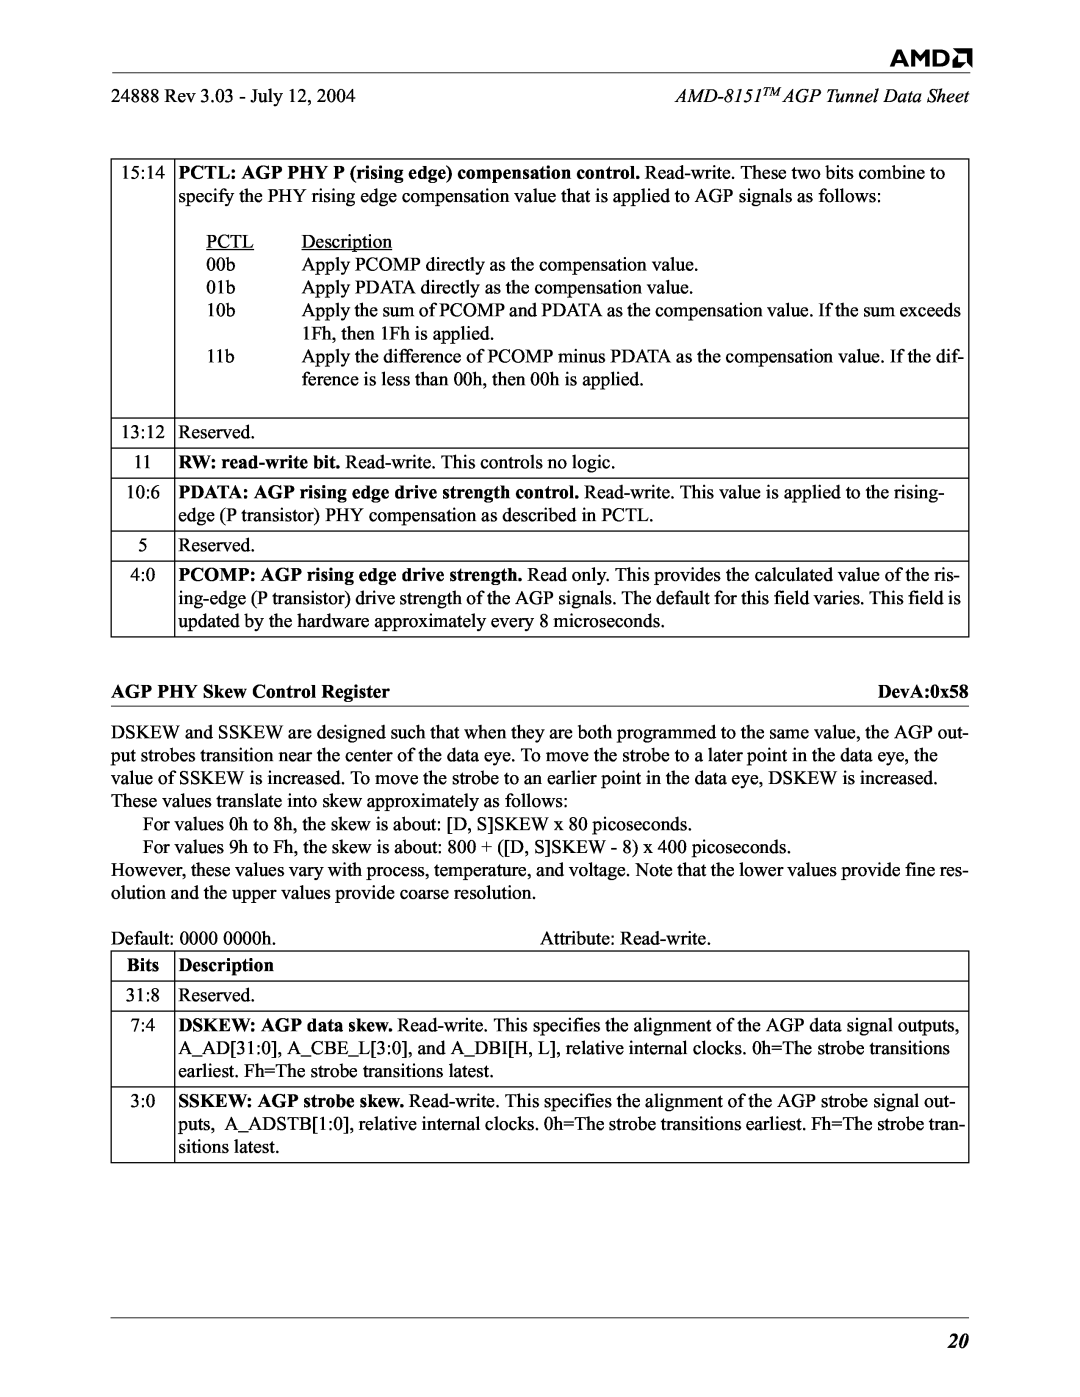 AMD 8151 specifications AGP PHY Skew Control Register, DevA, Bits, Description 